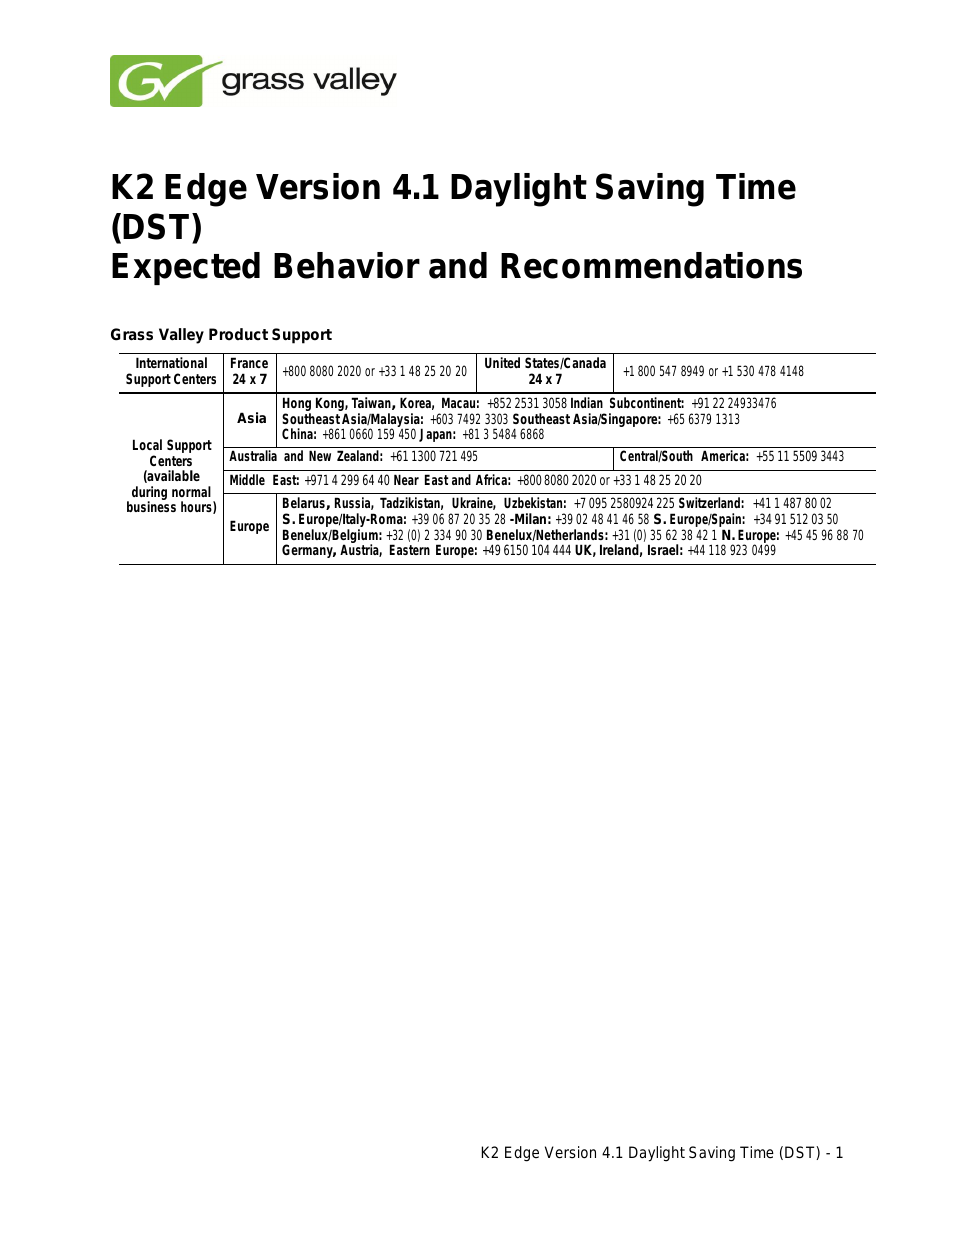 K2 Edge Daylight Saving Time V.4.1